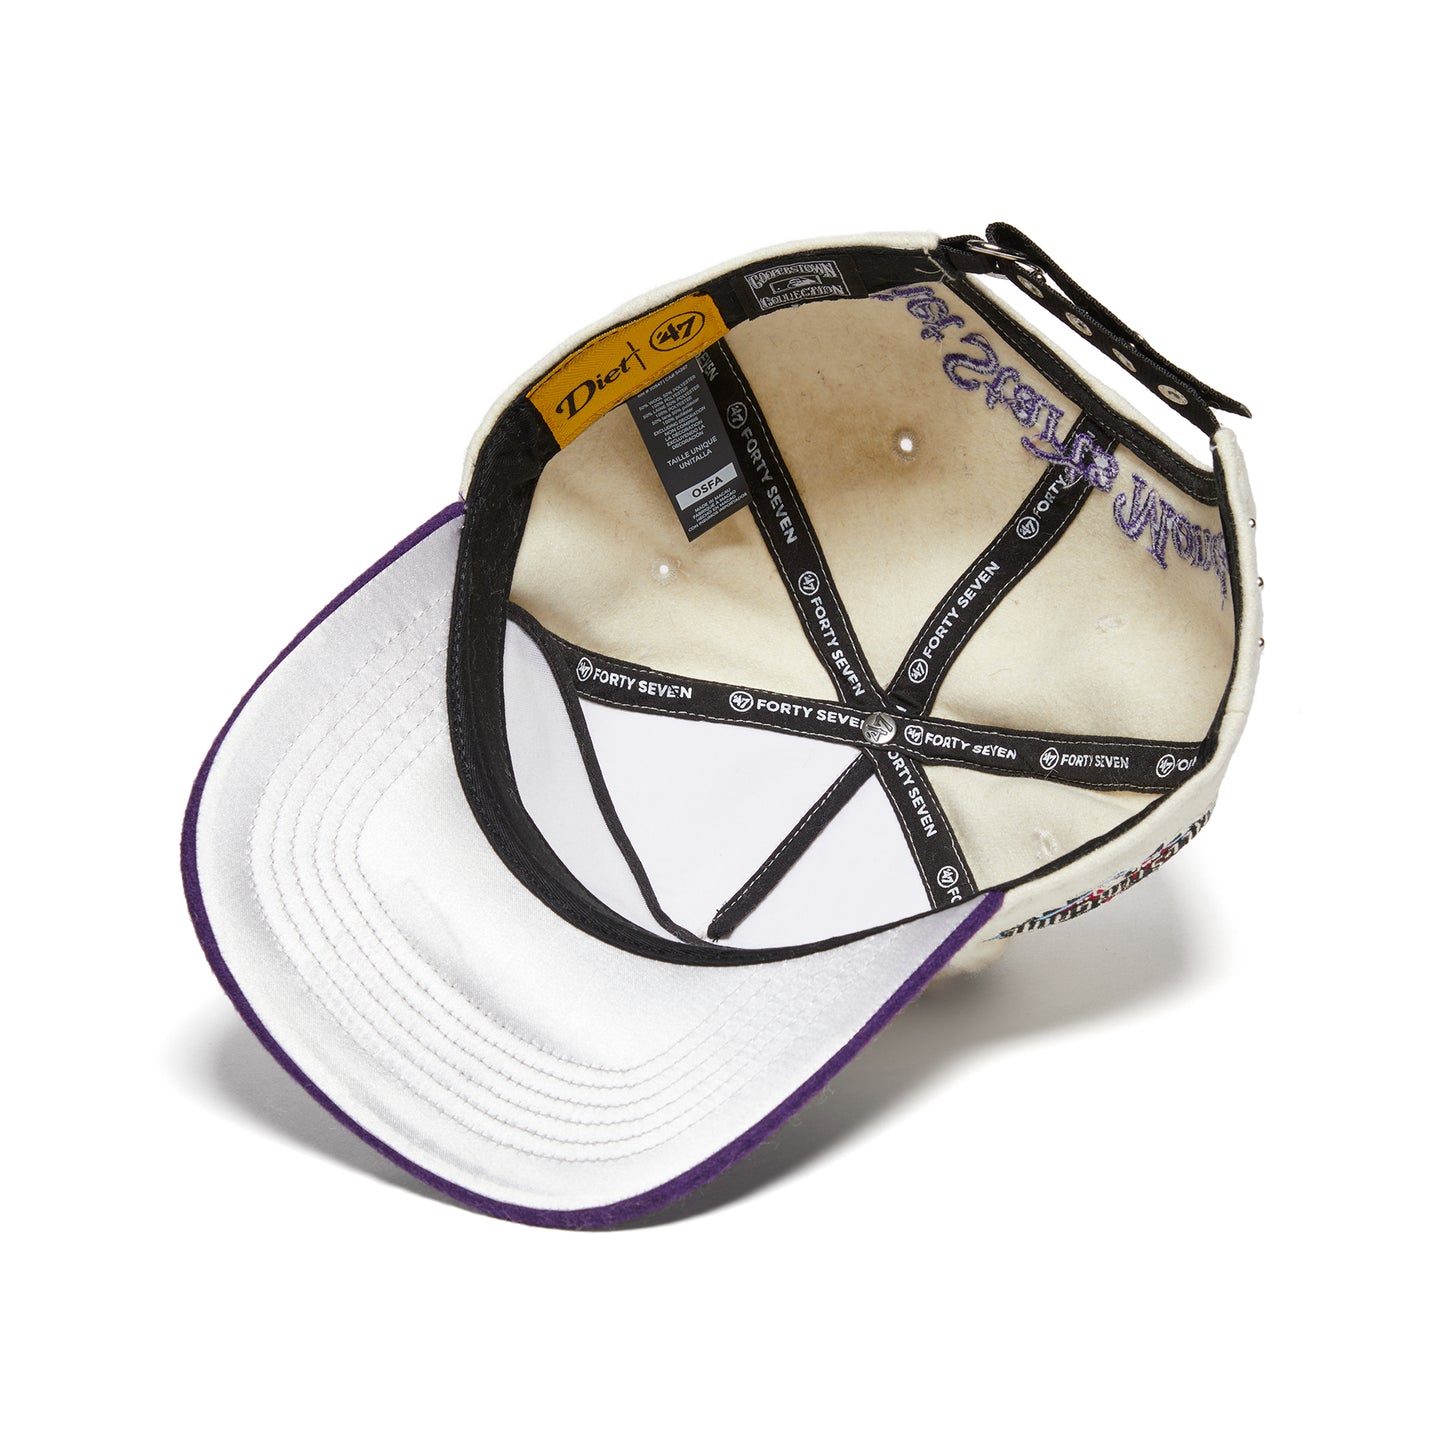 Diet Starts Monday x '47 Diamondbacks Hat (Antique/Purple)